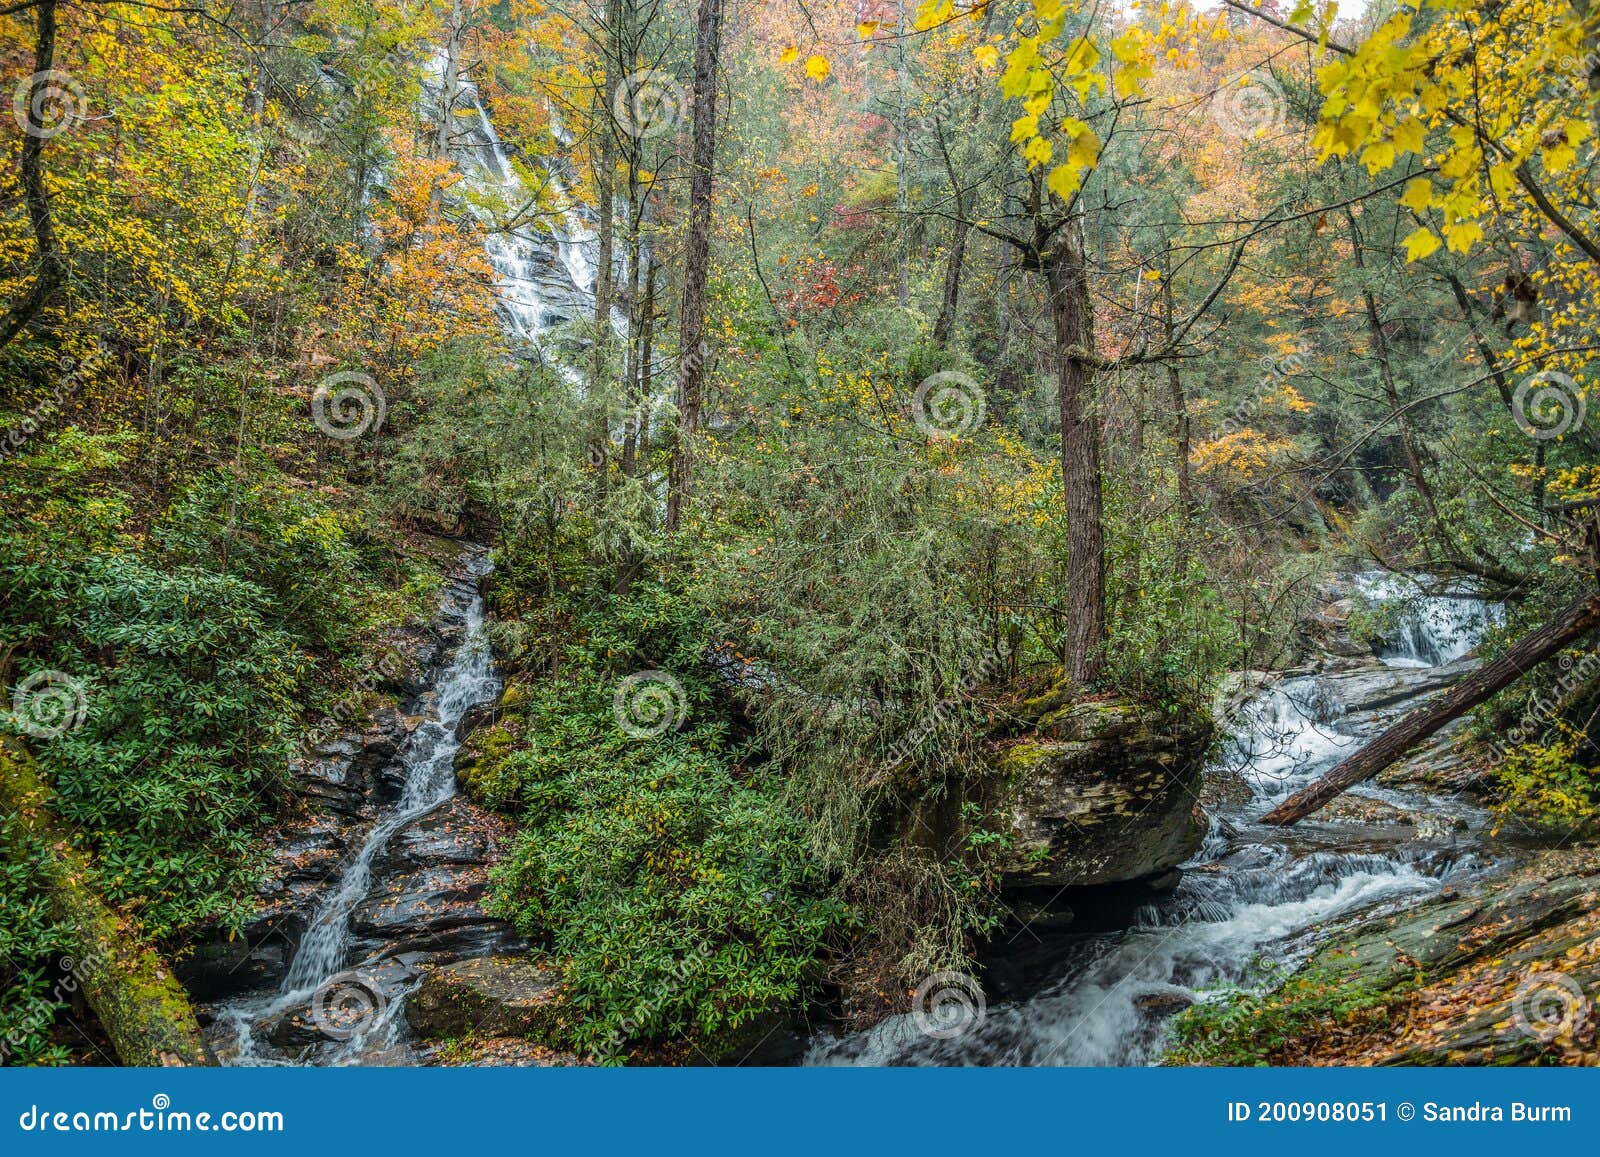 dukes creek falls in georgia